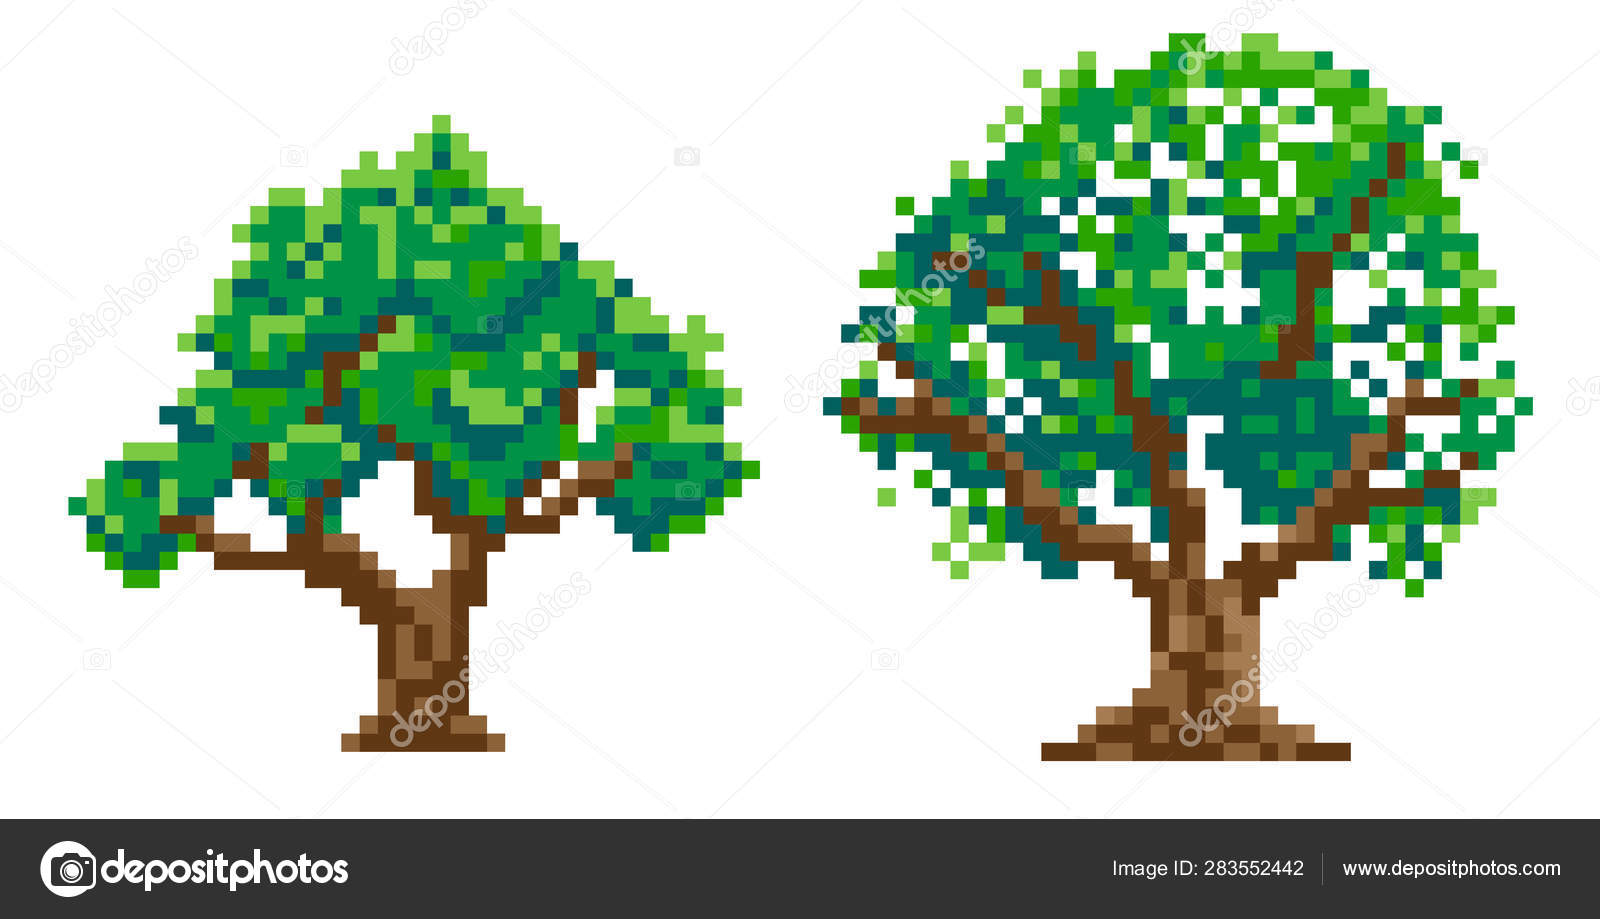 Jogo de 2 árvores de pixel, arte de pixel. vetor imagem vetorial